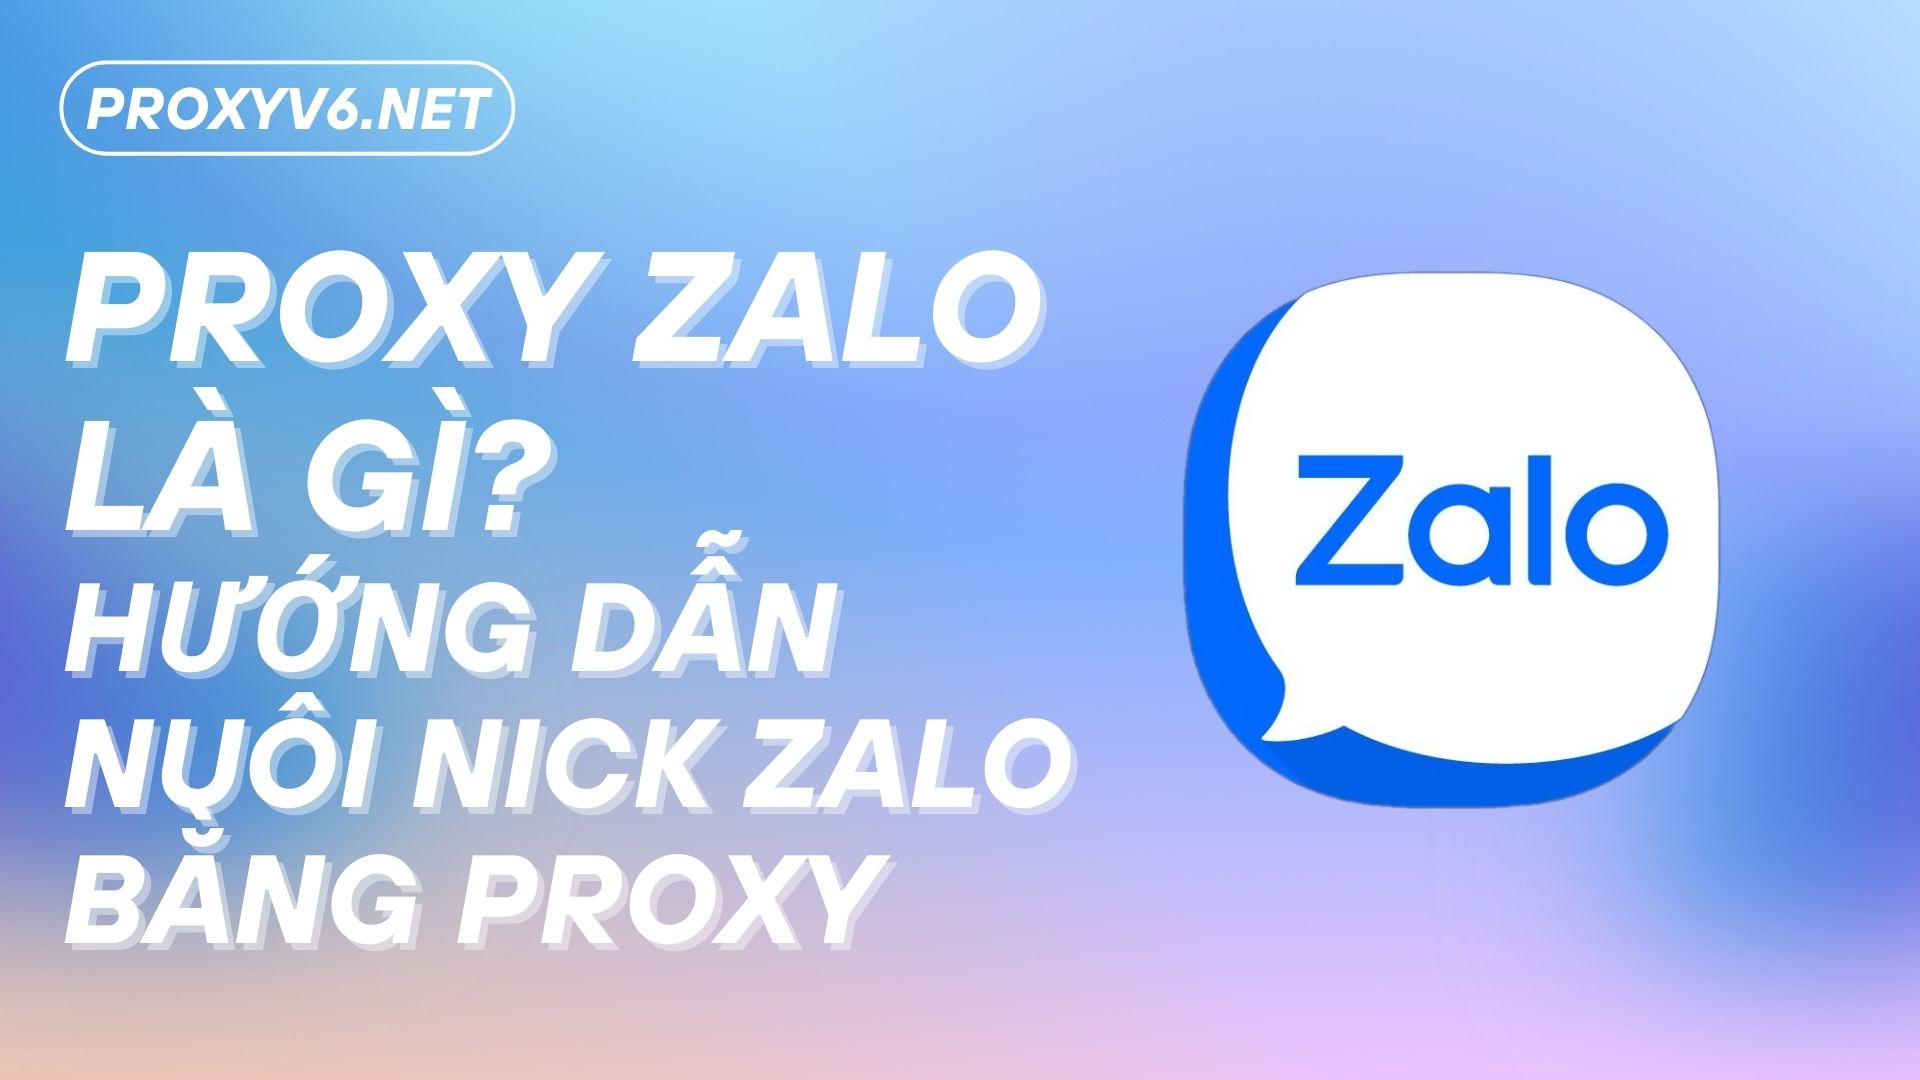 Proxy Zalo là gì? Hướng dẫn nuôi nick Zalo bằng Proxy